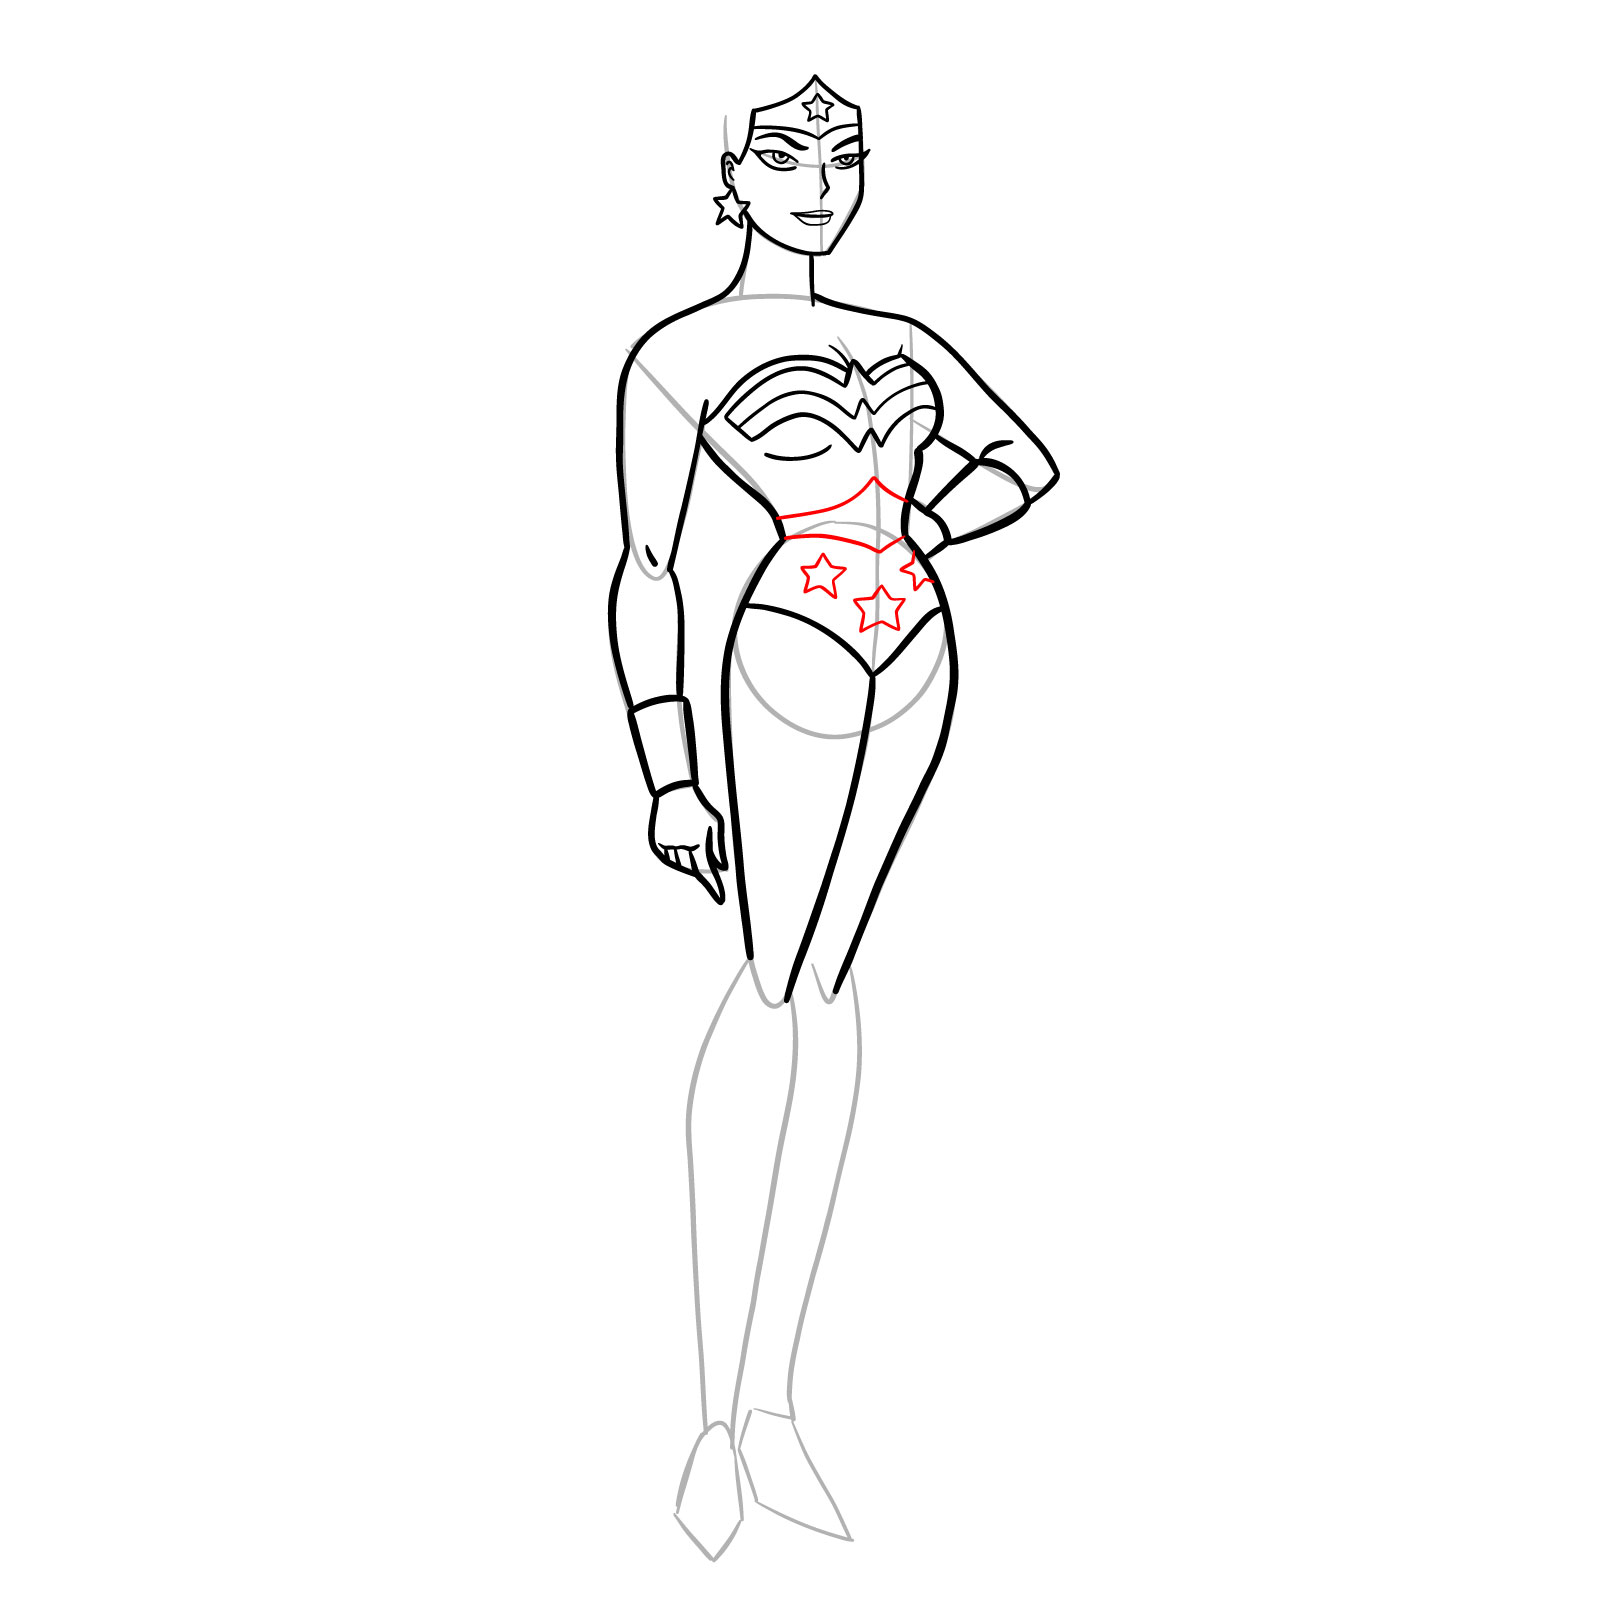 300 Superhero Girl Drawing Illustrations RoyaltyFree Vector Graphics   Clip Art  iStock